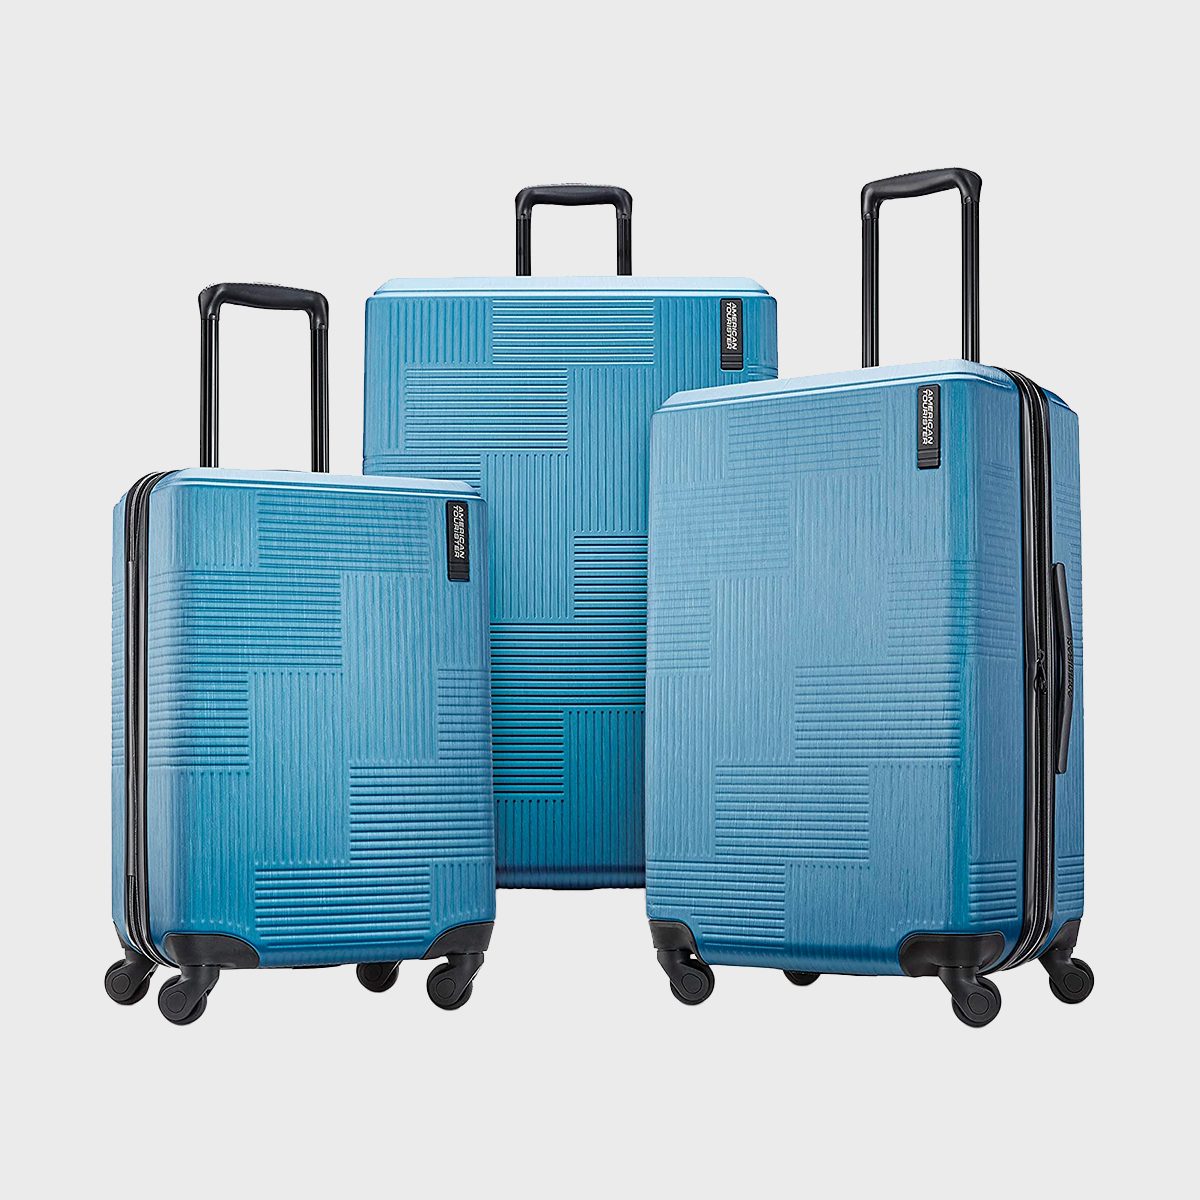 American Tourister 3-Piece Luggage Set